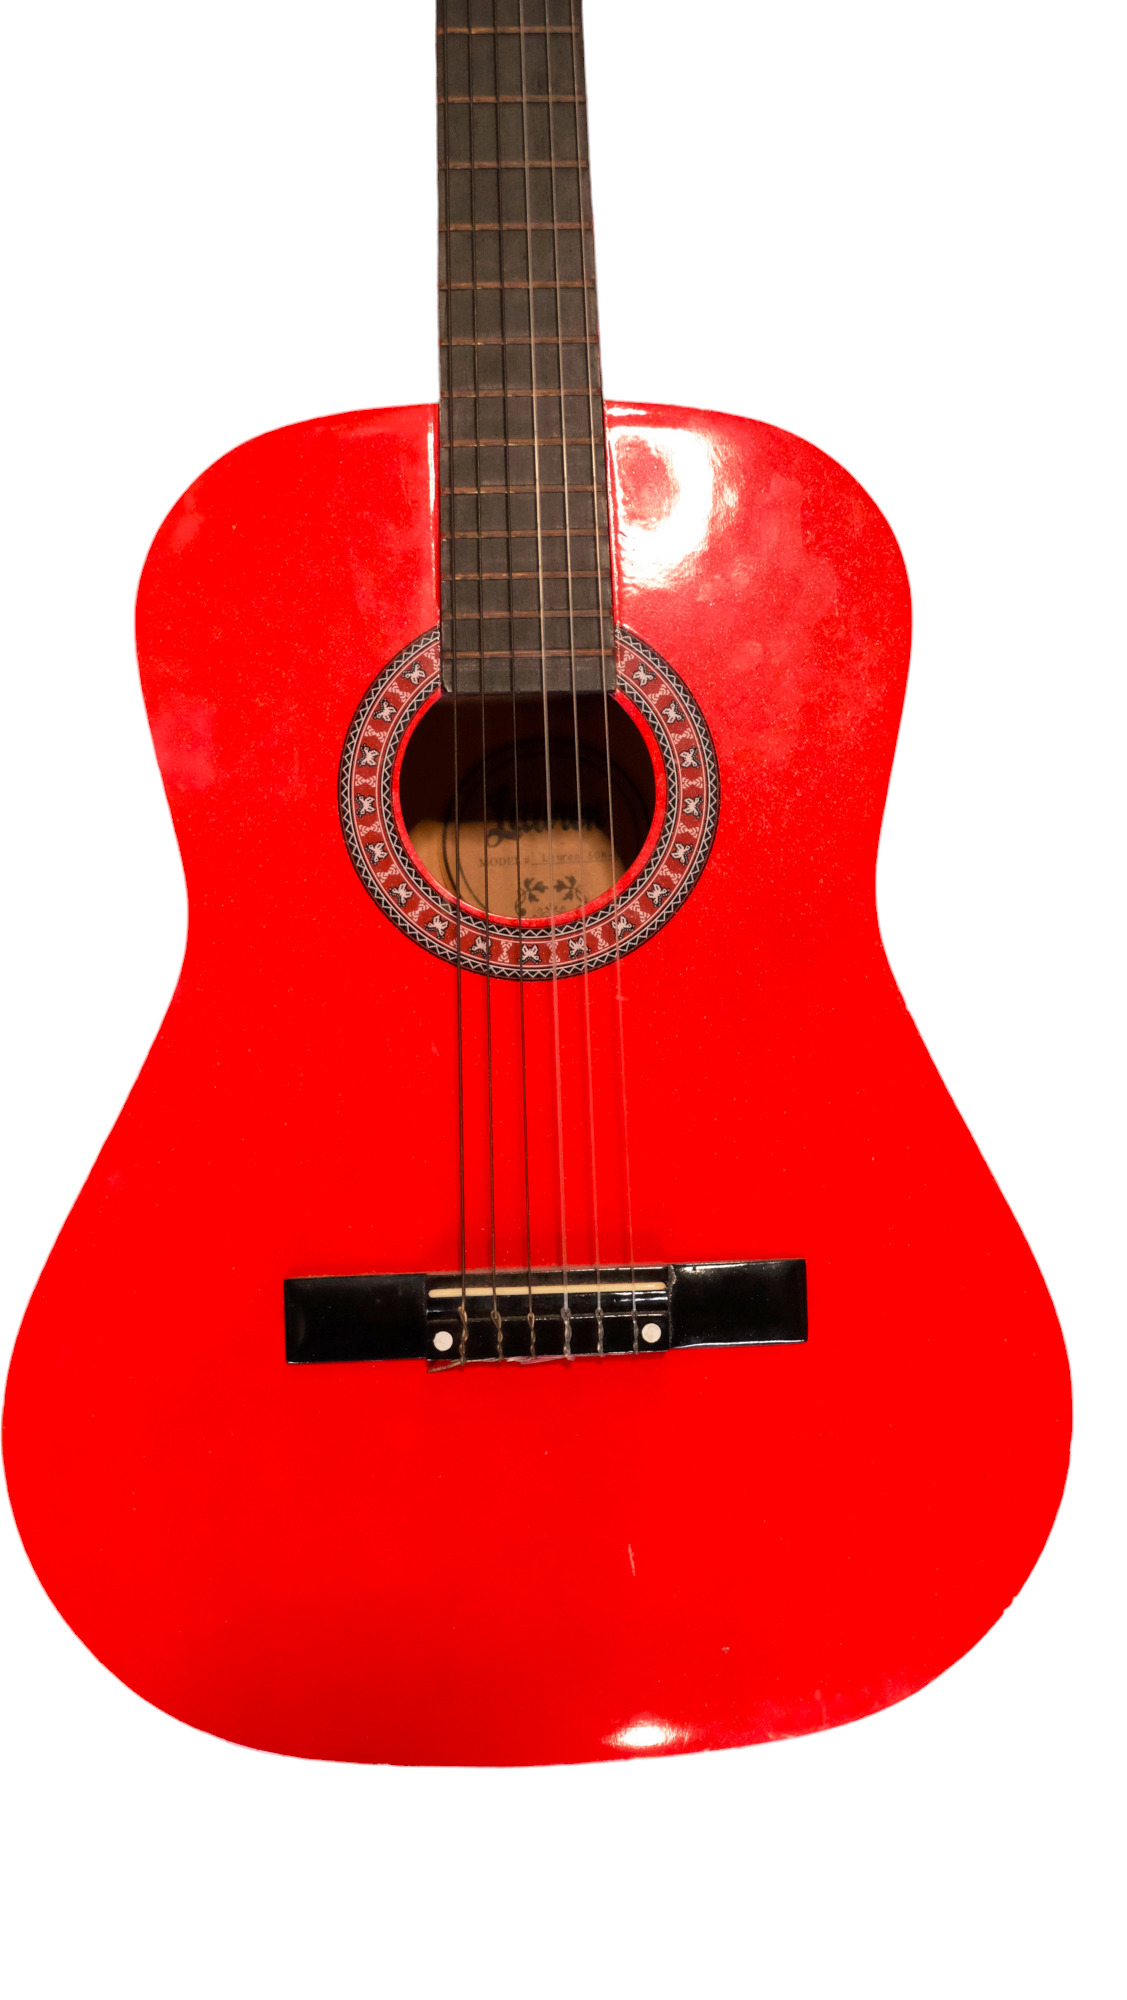 A Lauren acoustic guitar - Image 2 of 2